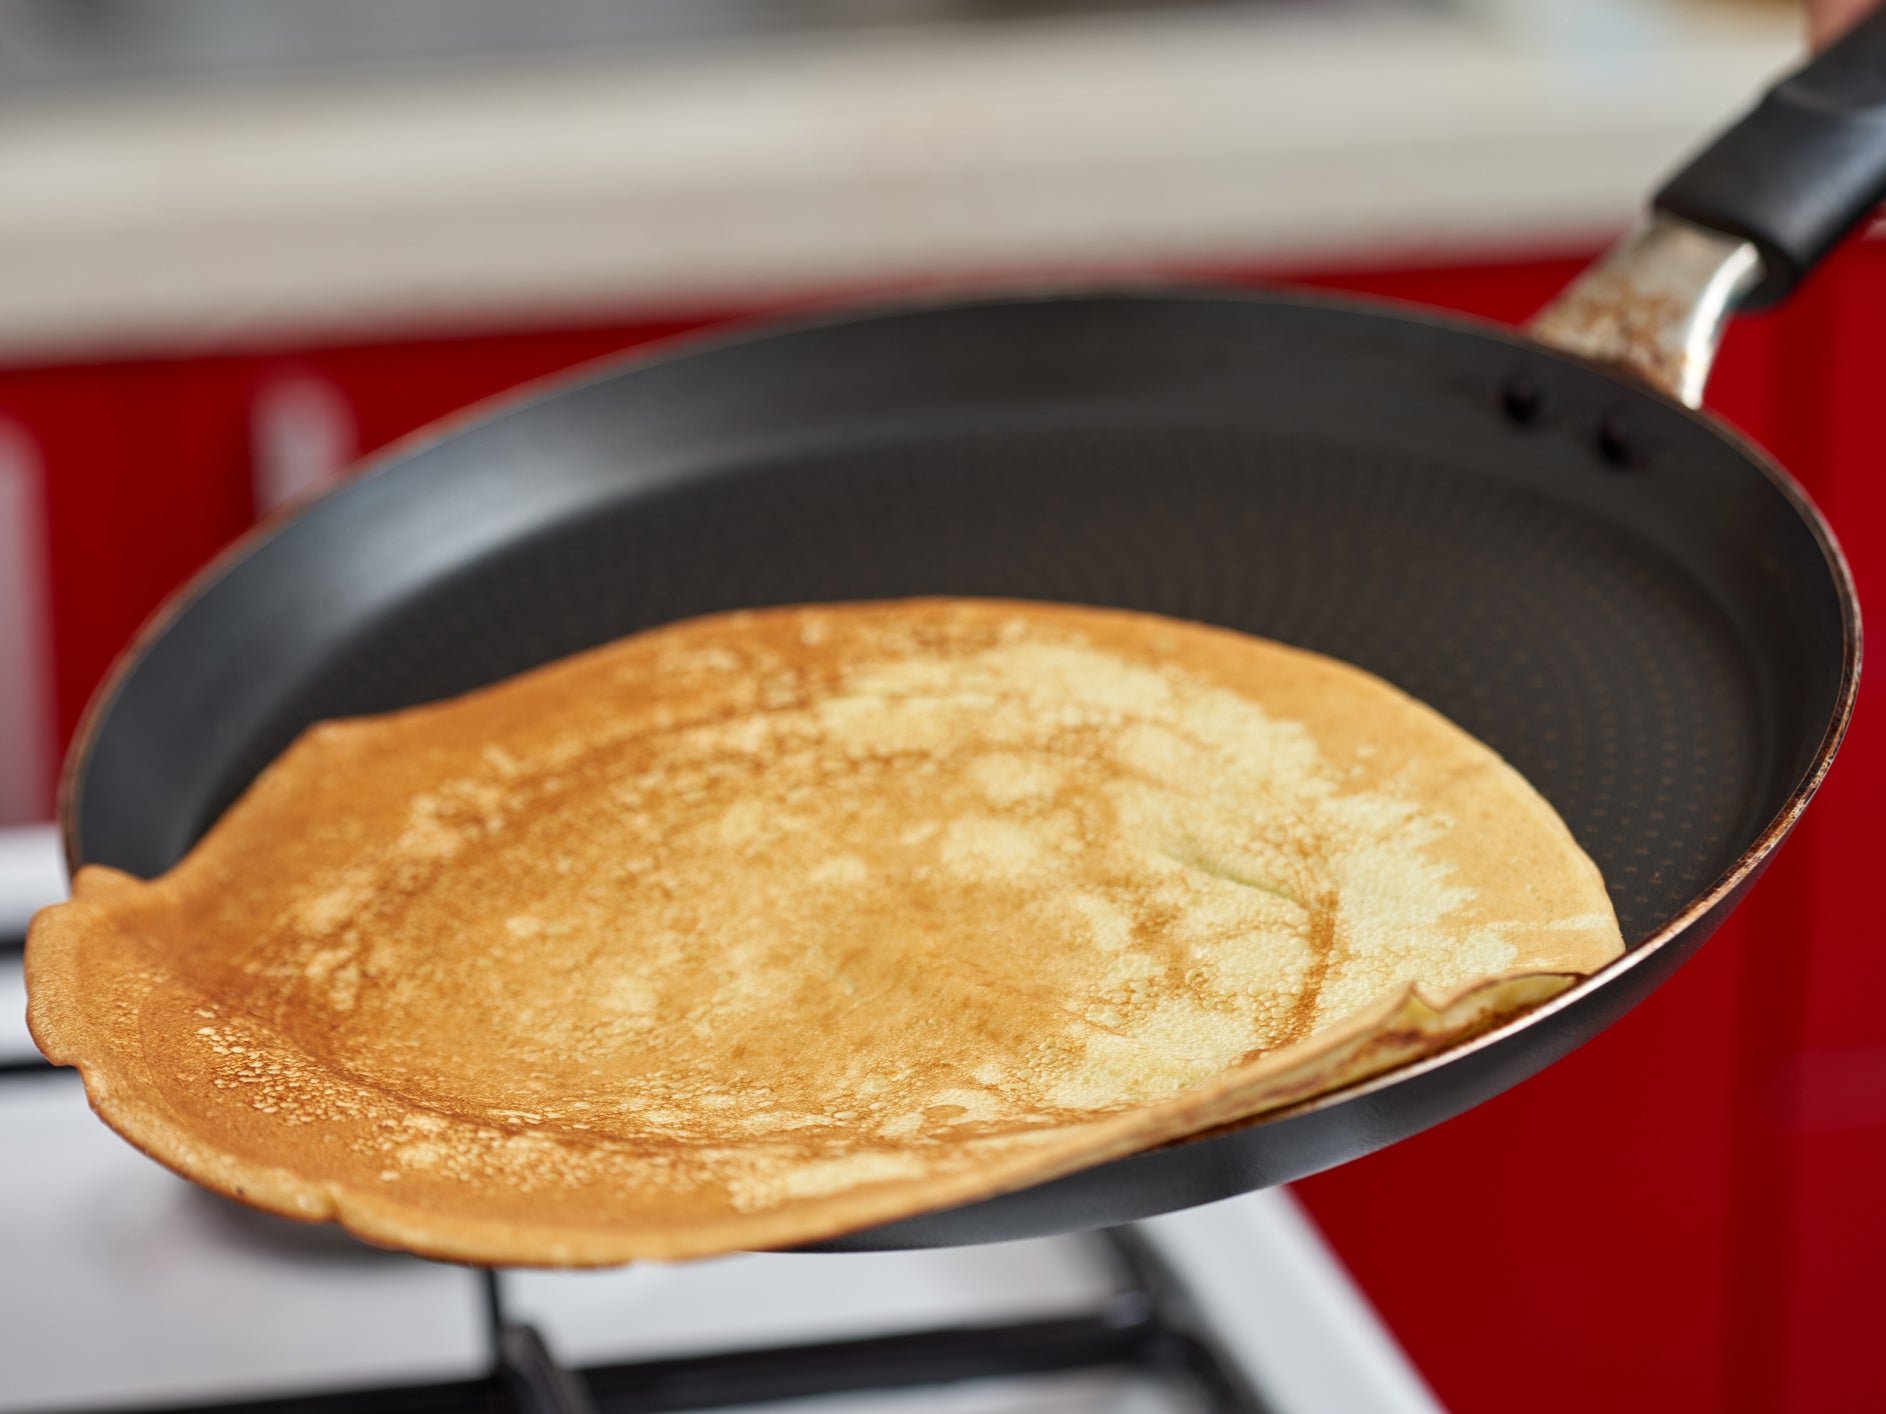 Cartoonist Jan Krius used the humble pancake to satirise traditional holidays